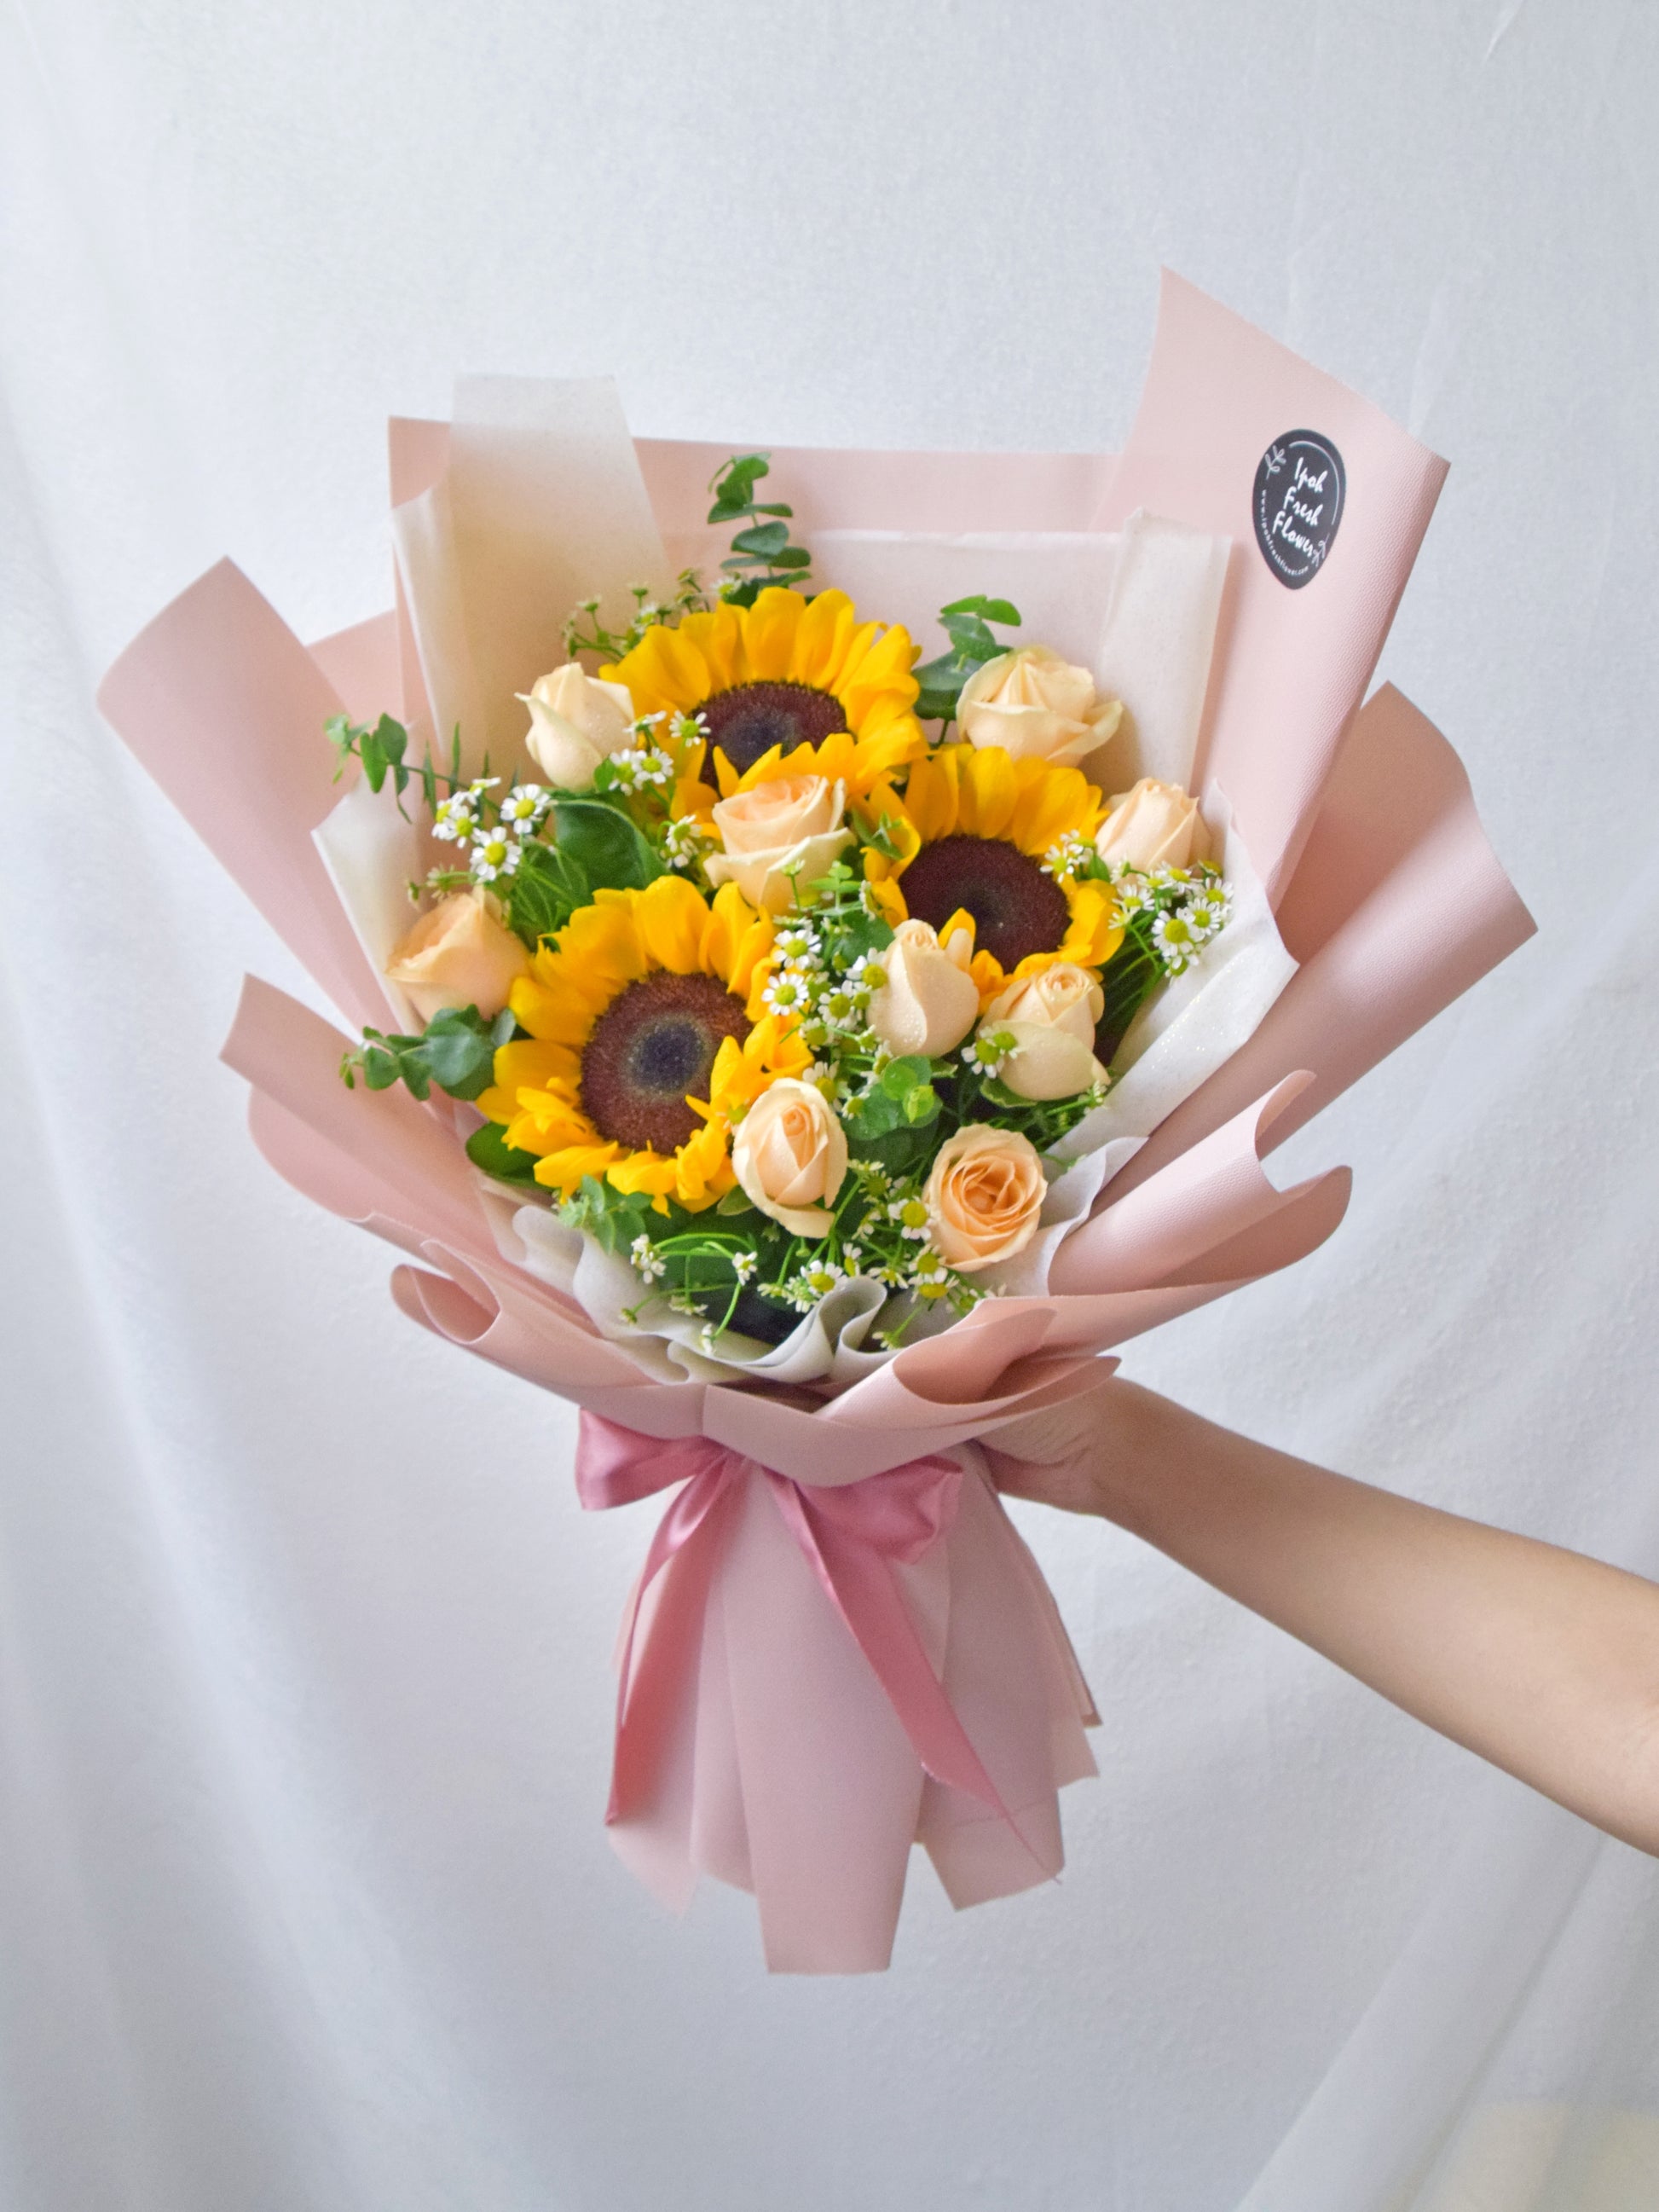 Marigold| Sunflower & rose bouquet